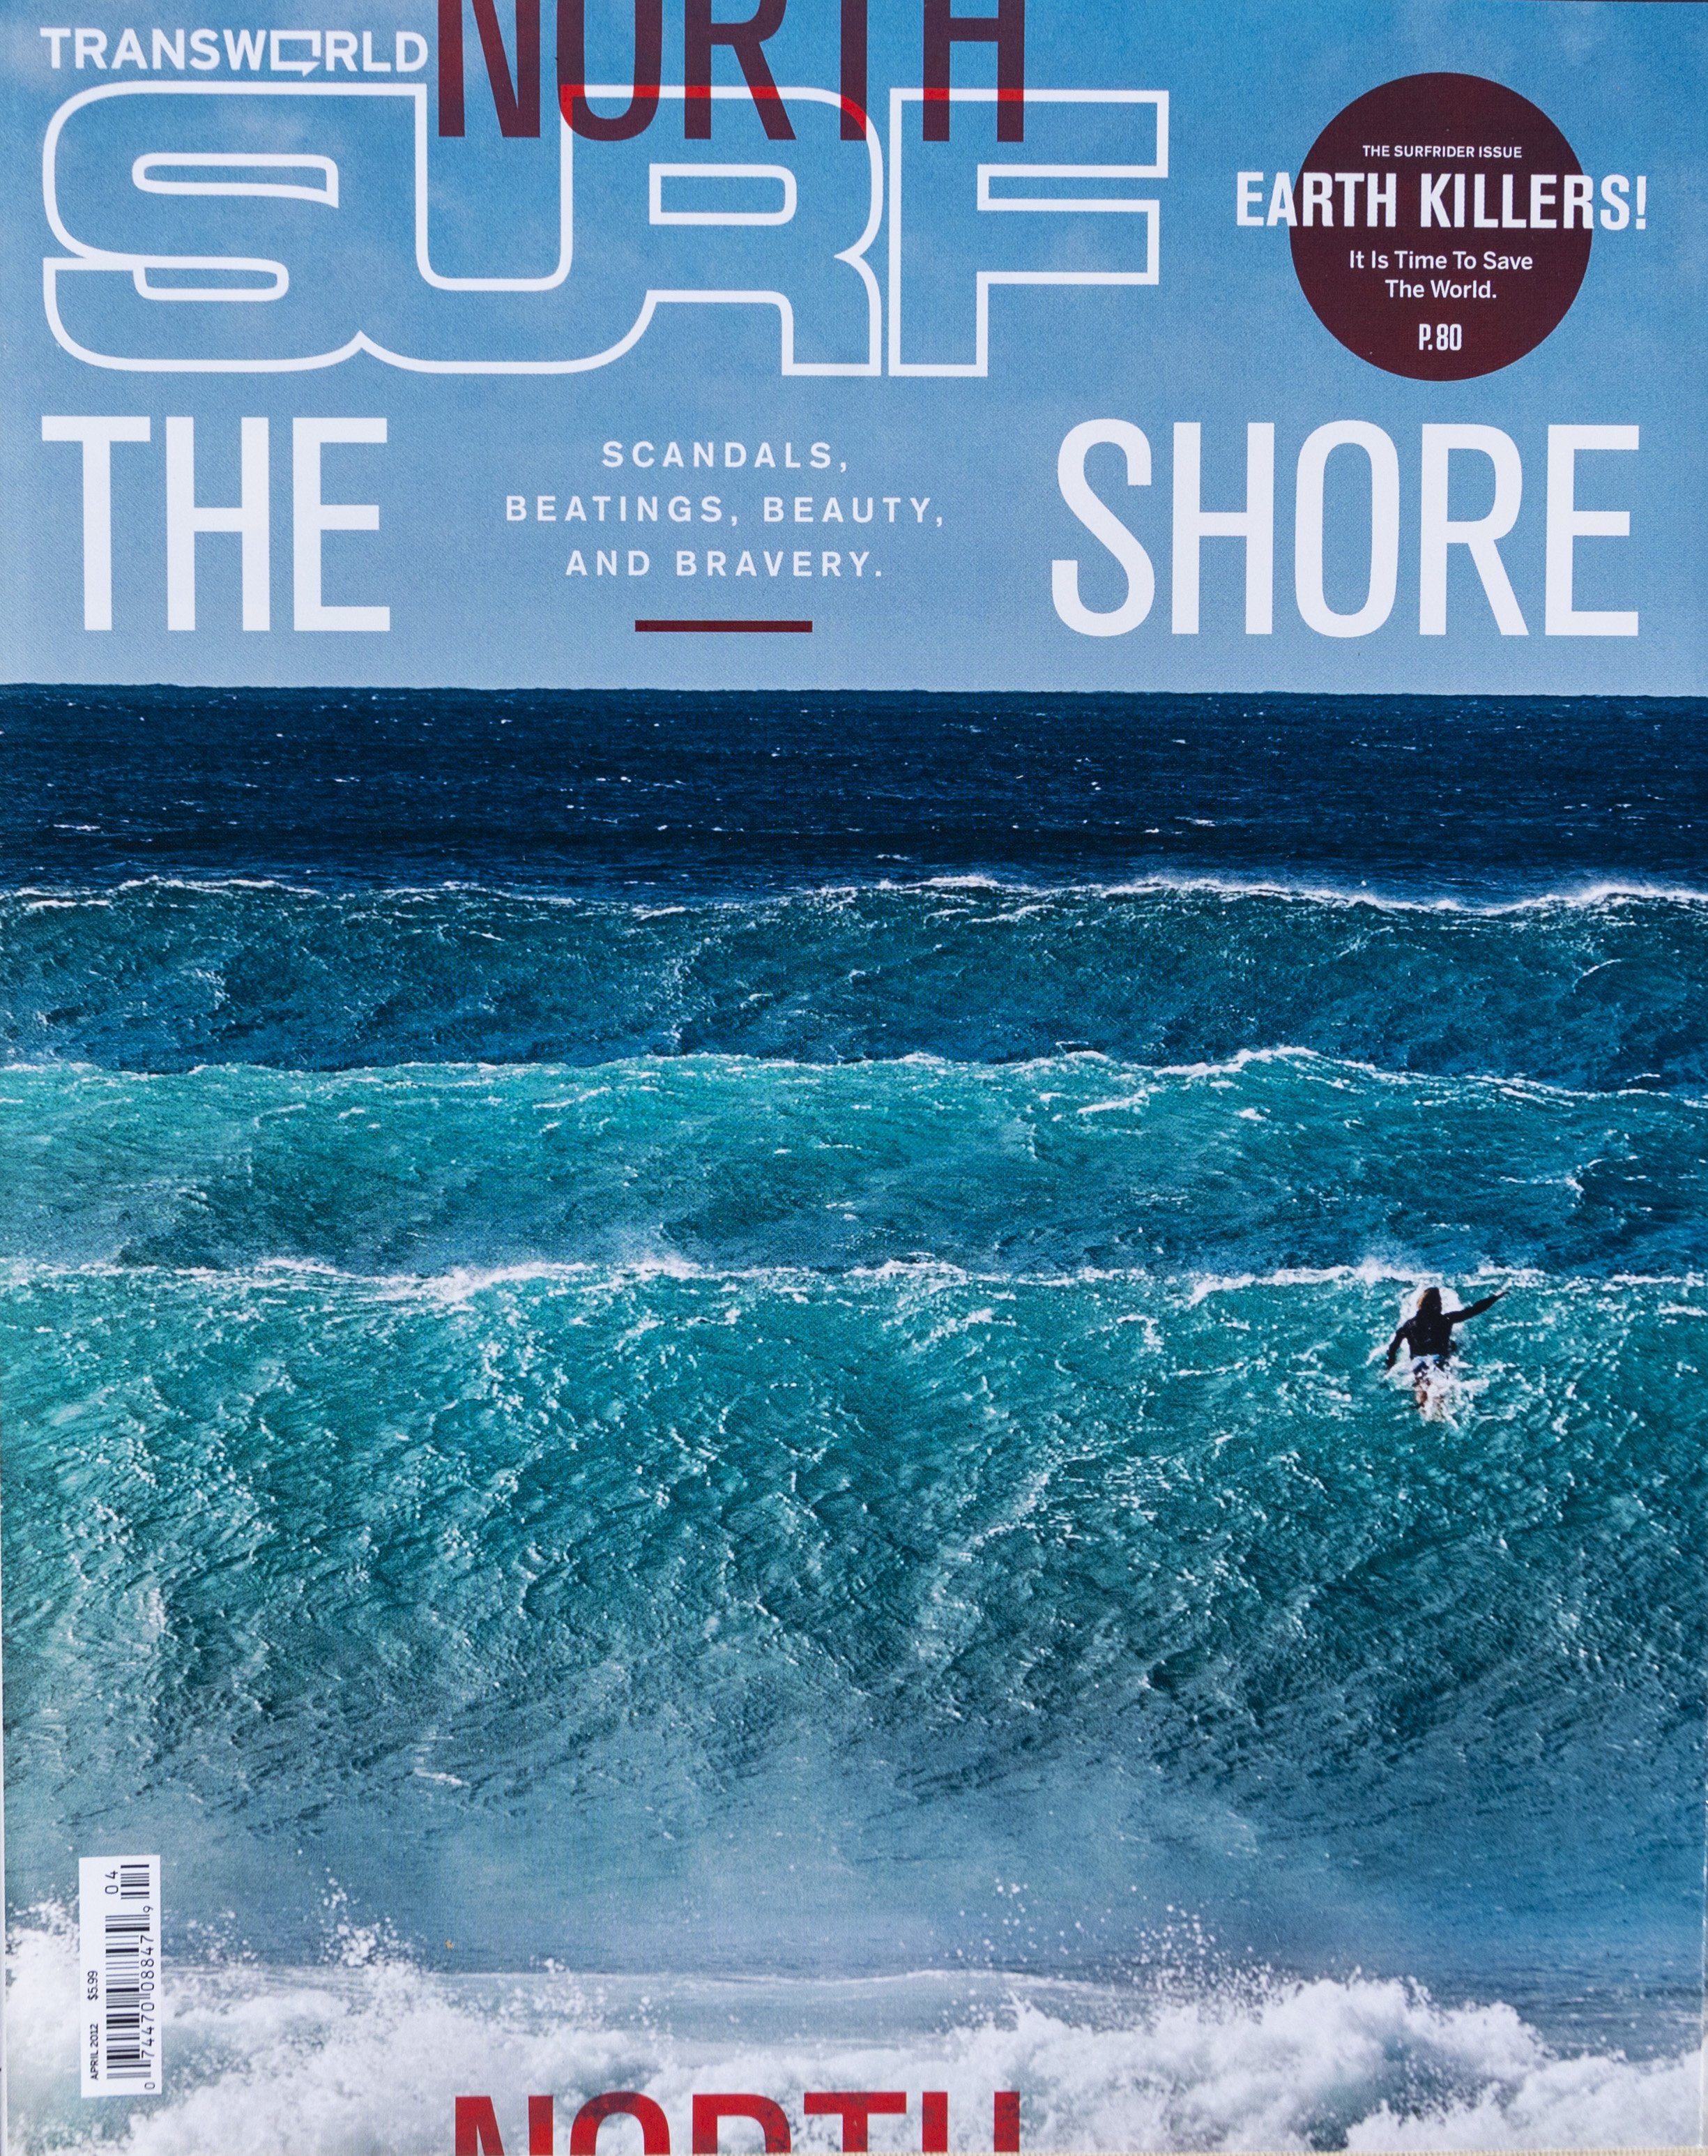 TransWorld SURF Cover, April 2012